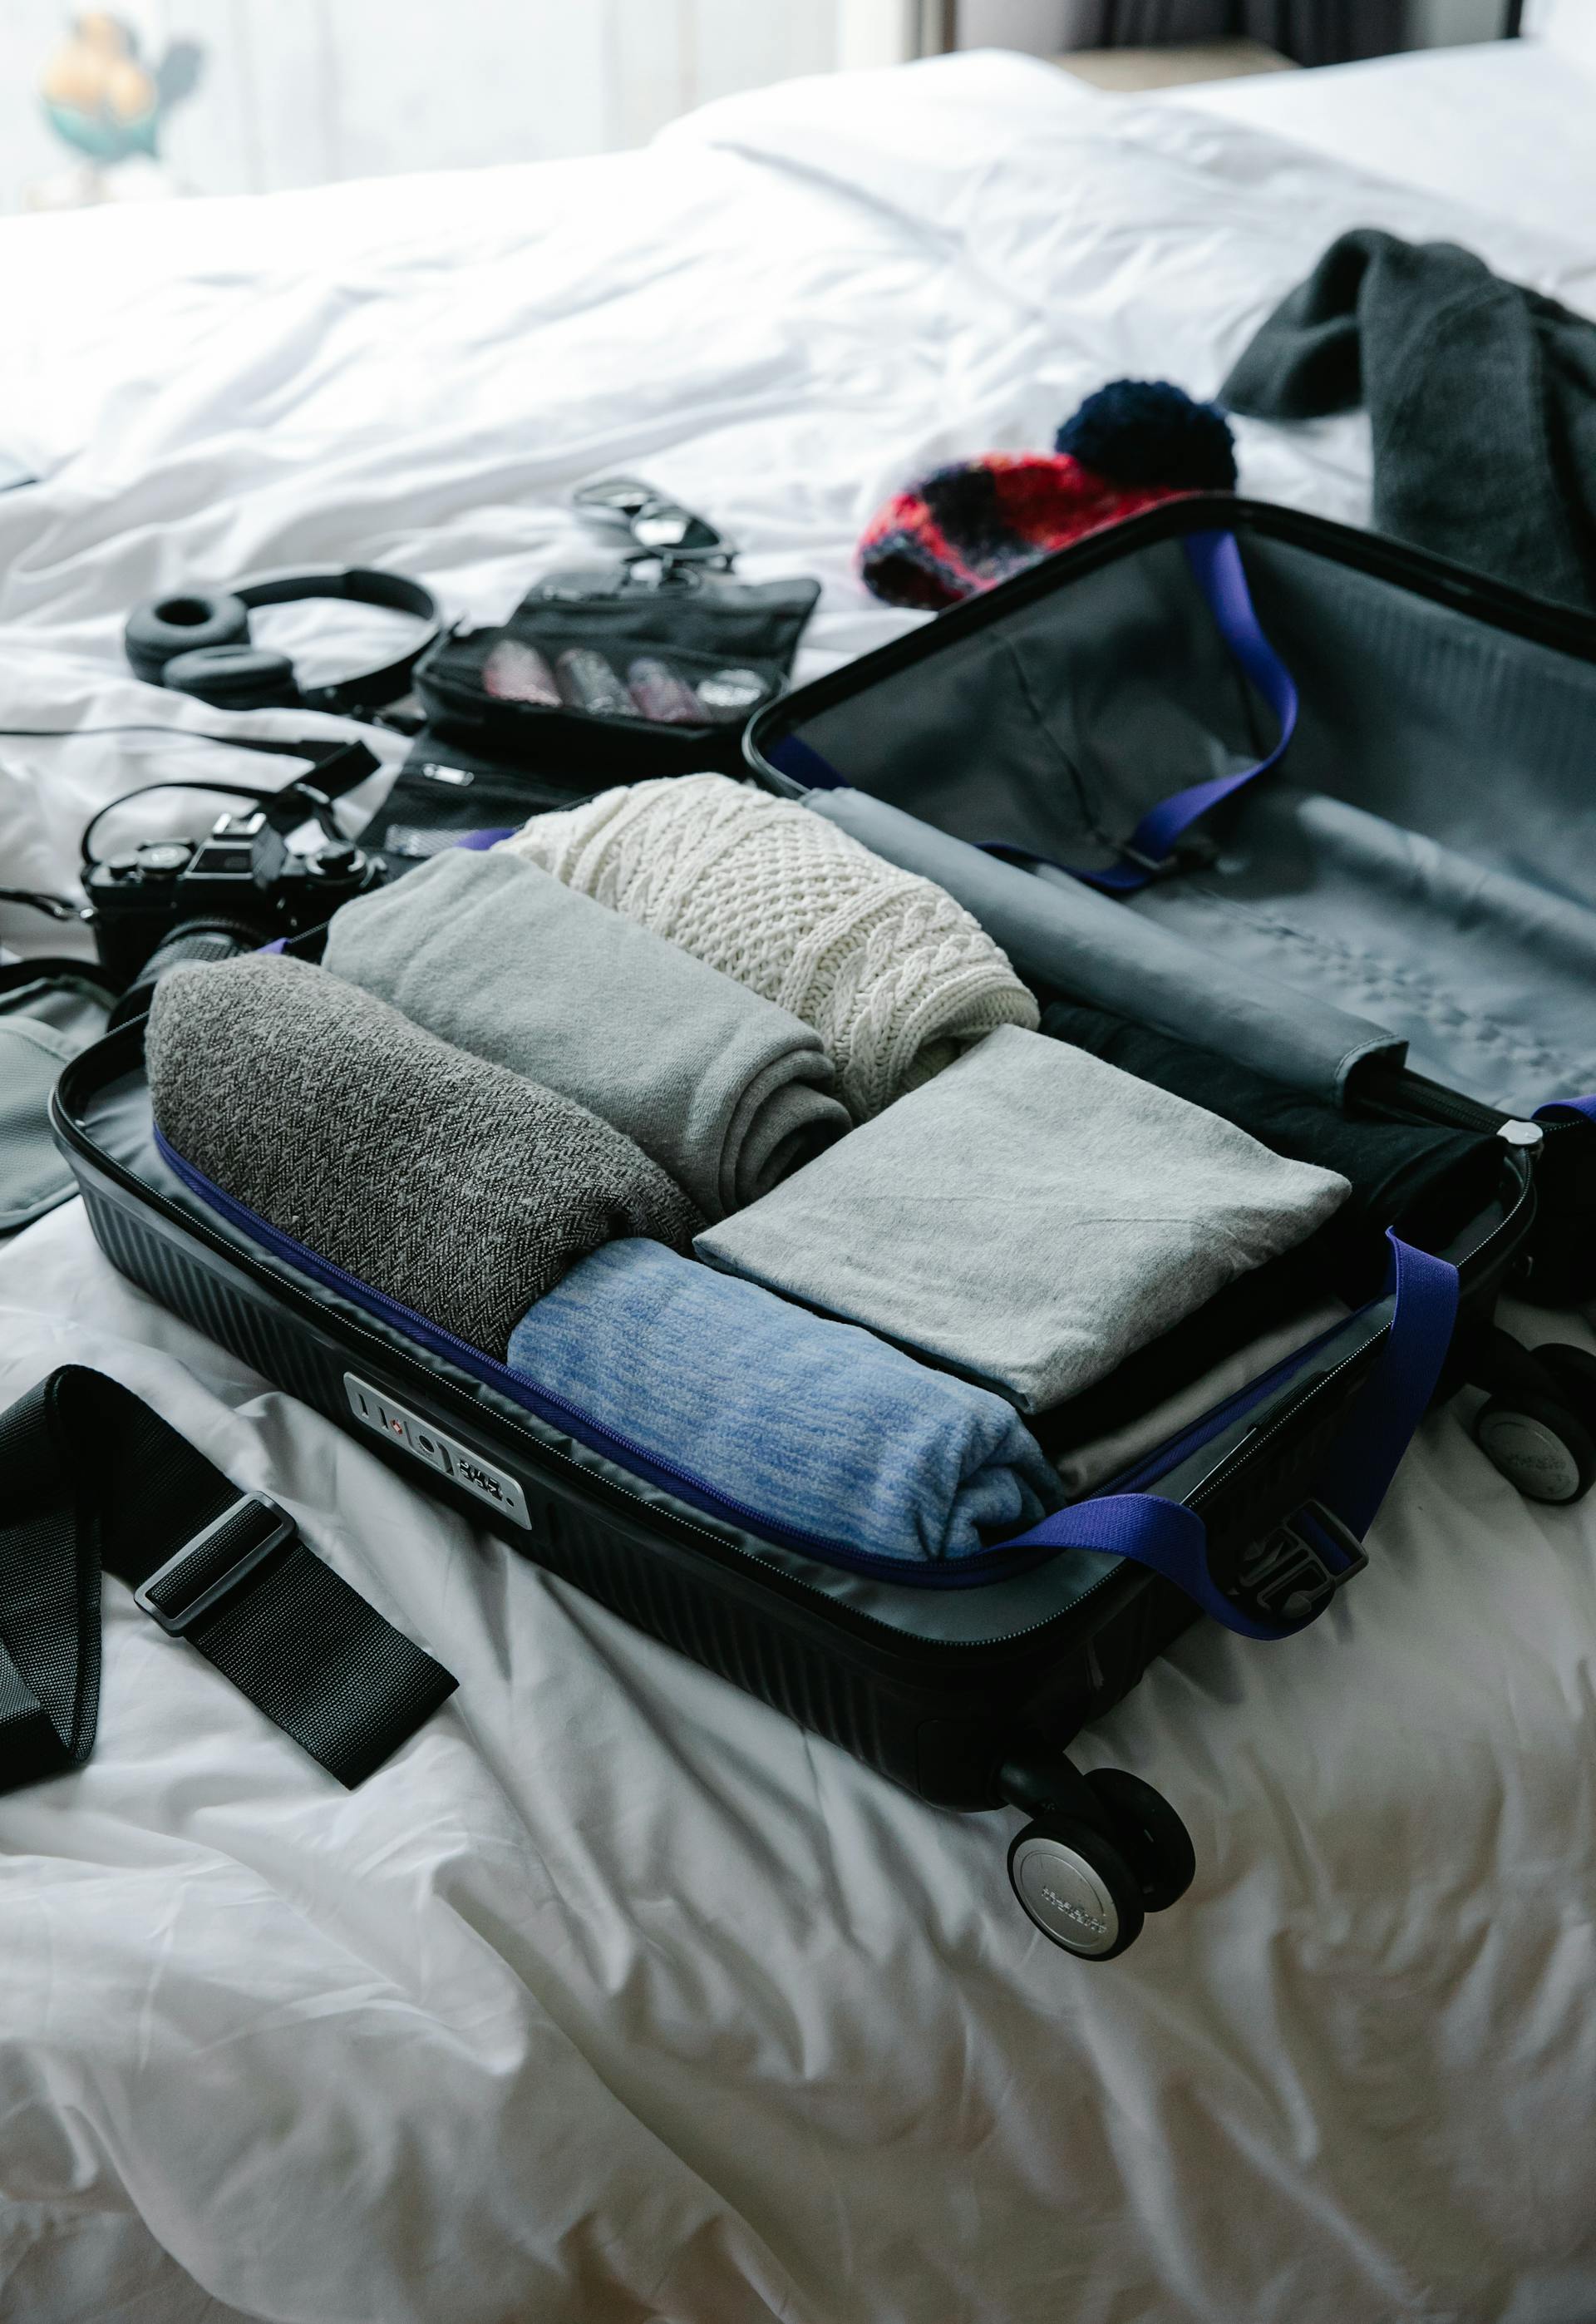 An open suitcase | Source: Pexels